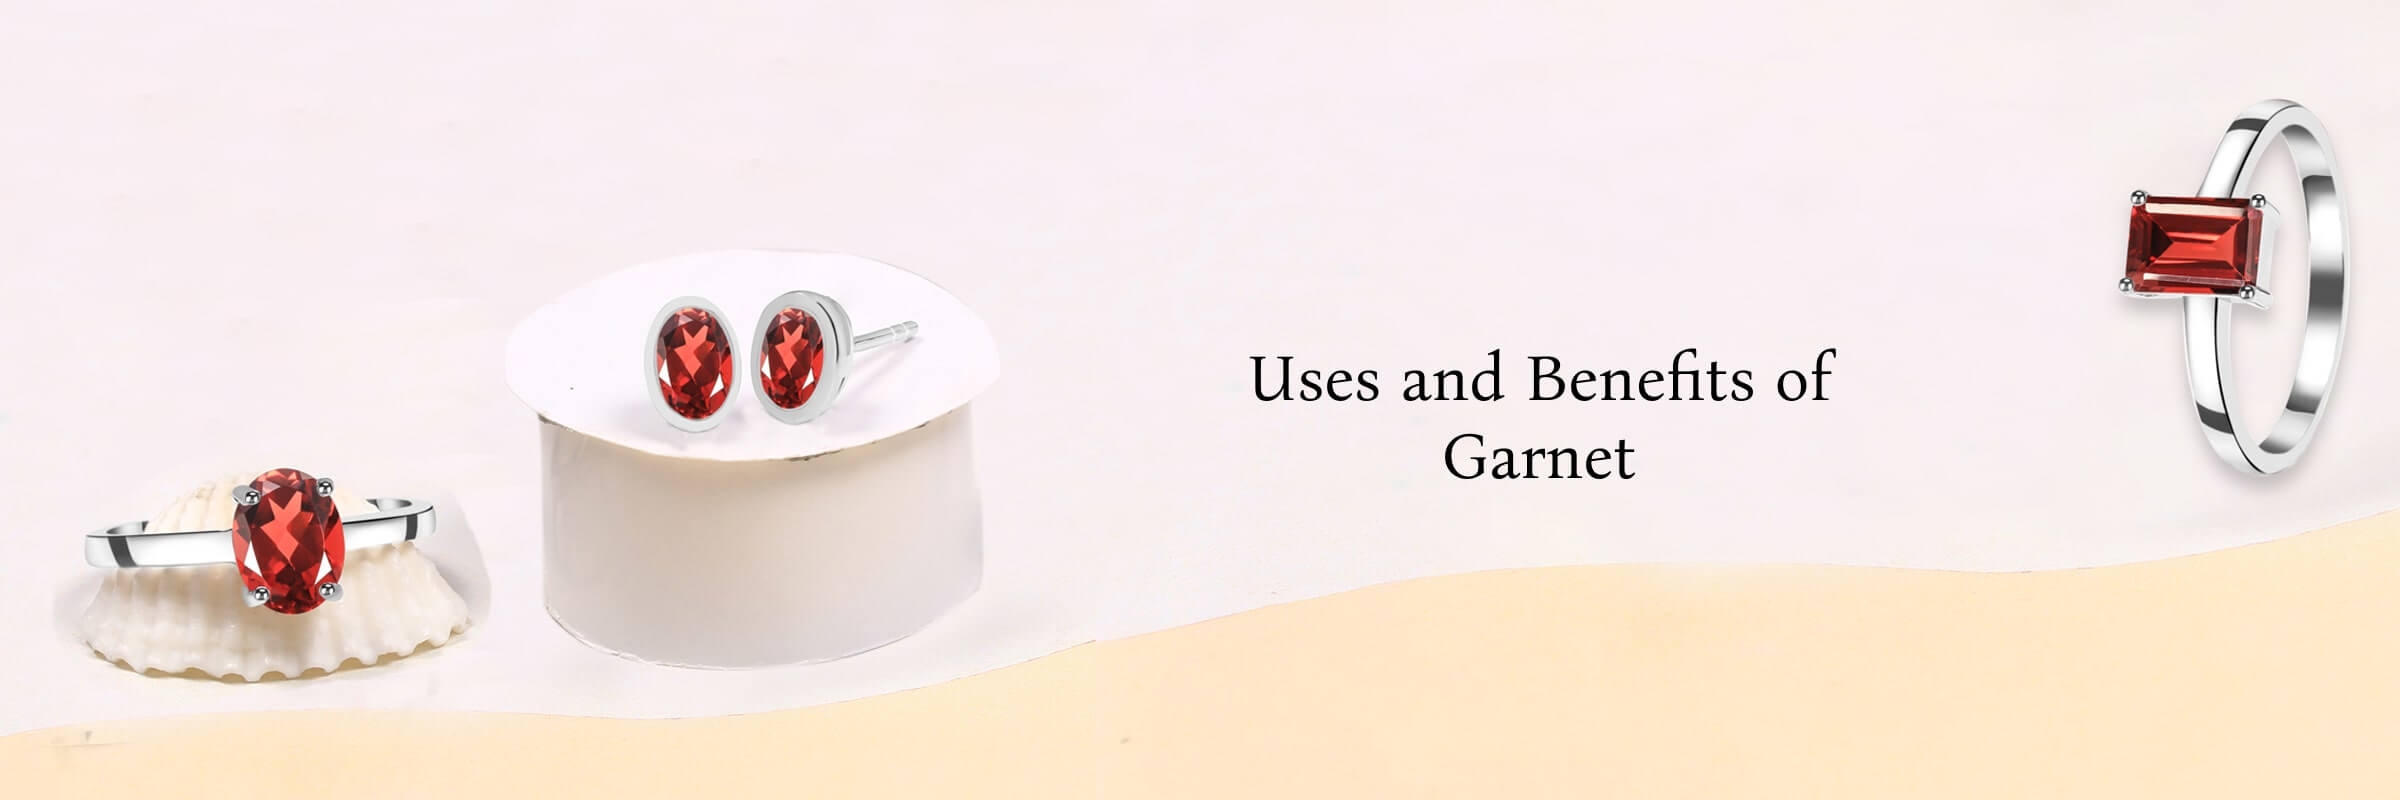 Garnet Uses and Benefits